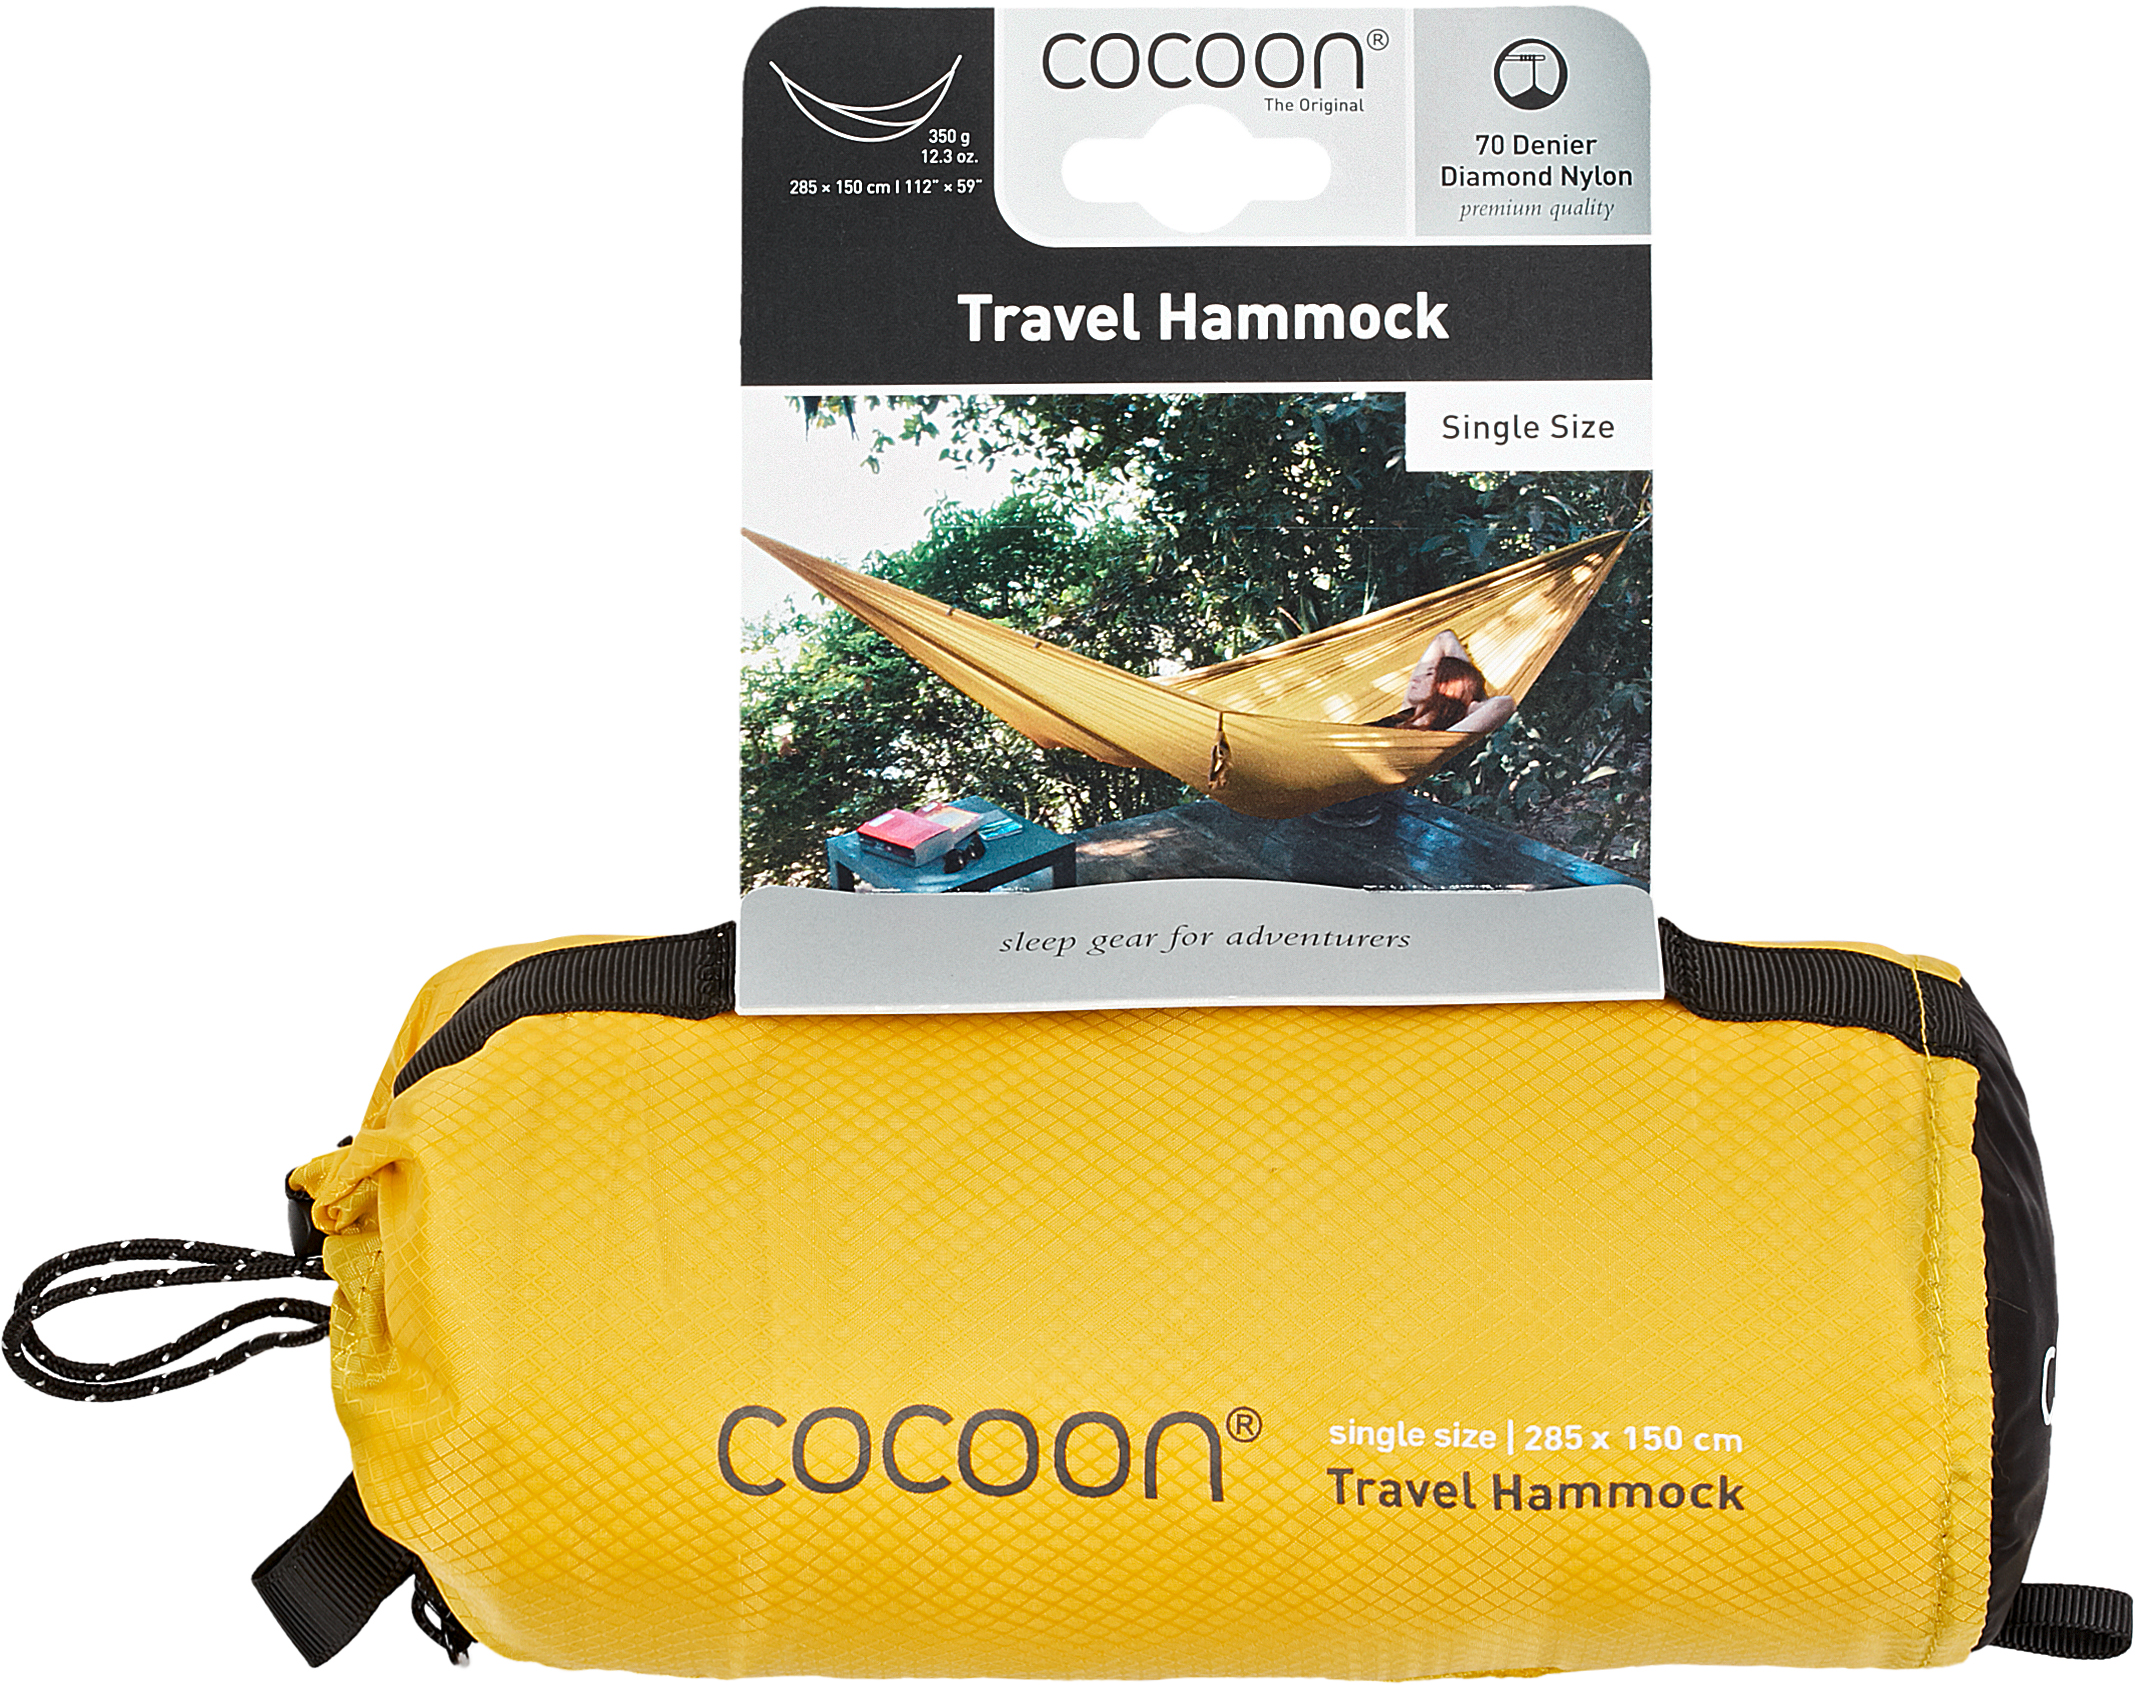 Travel Hammock